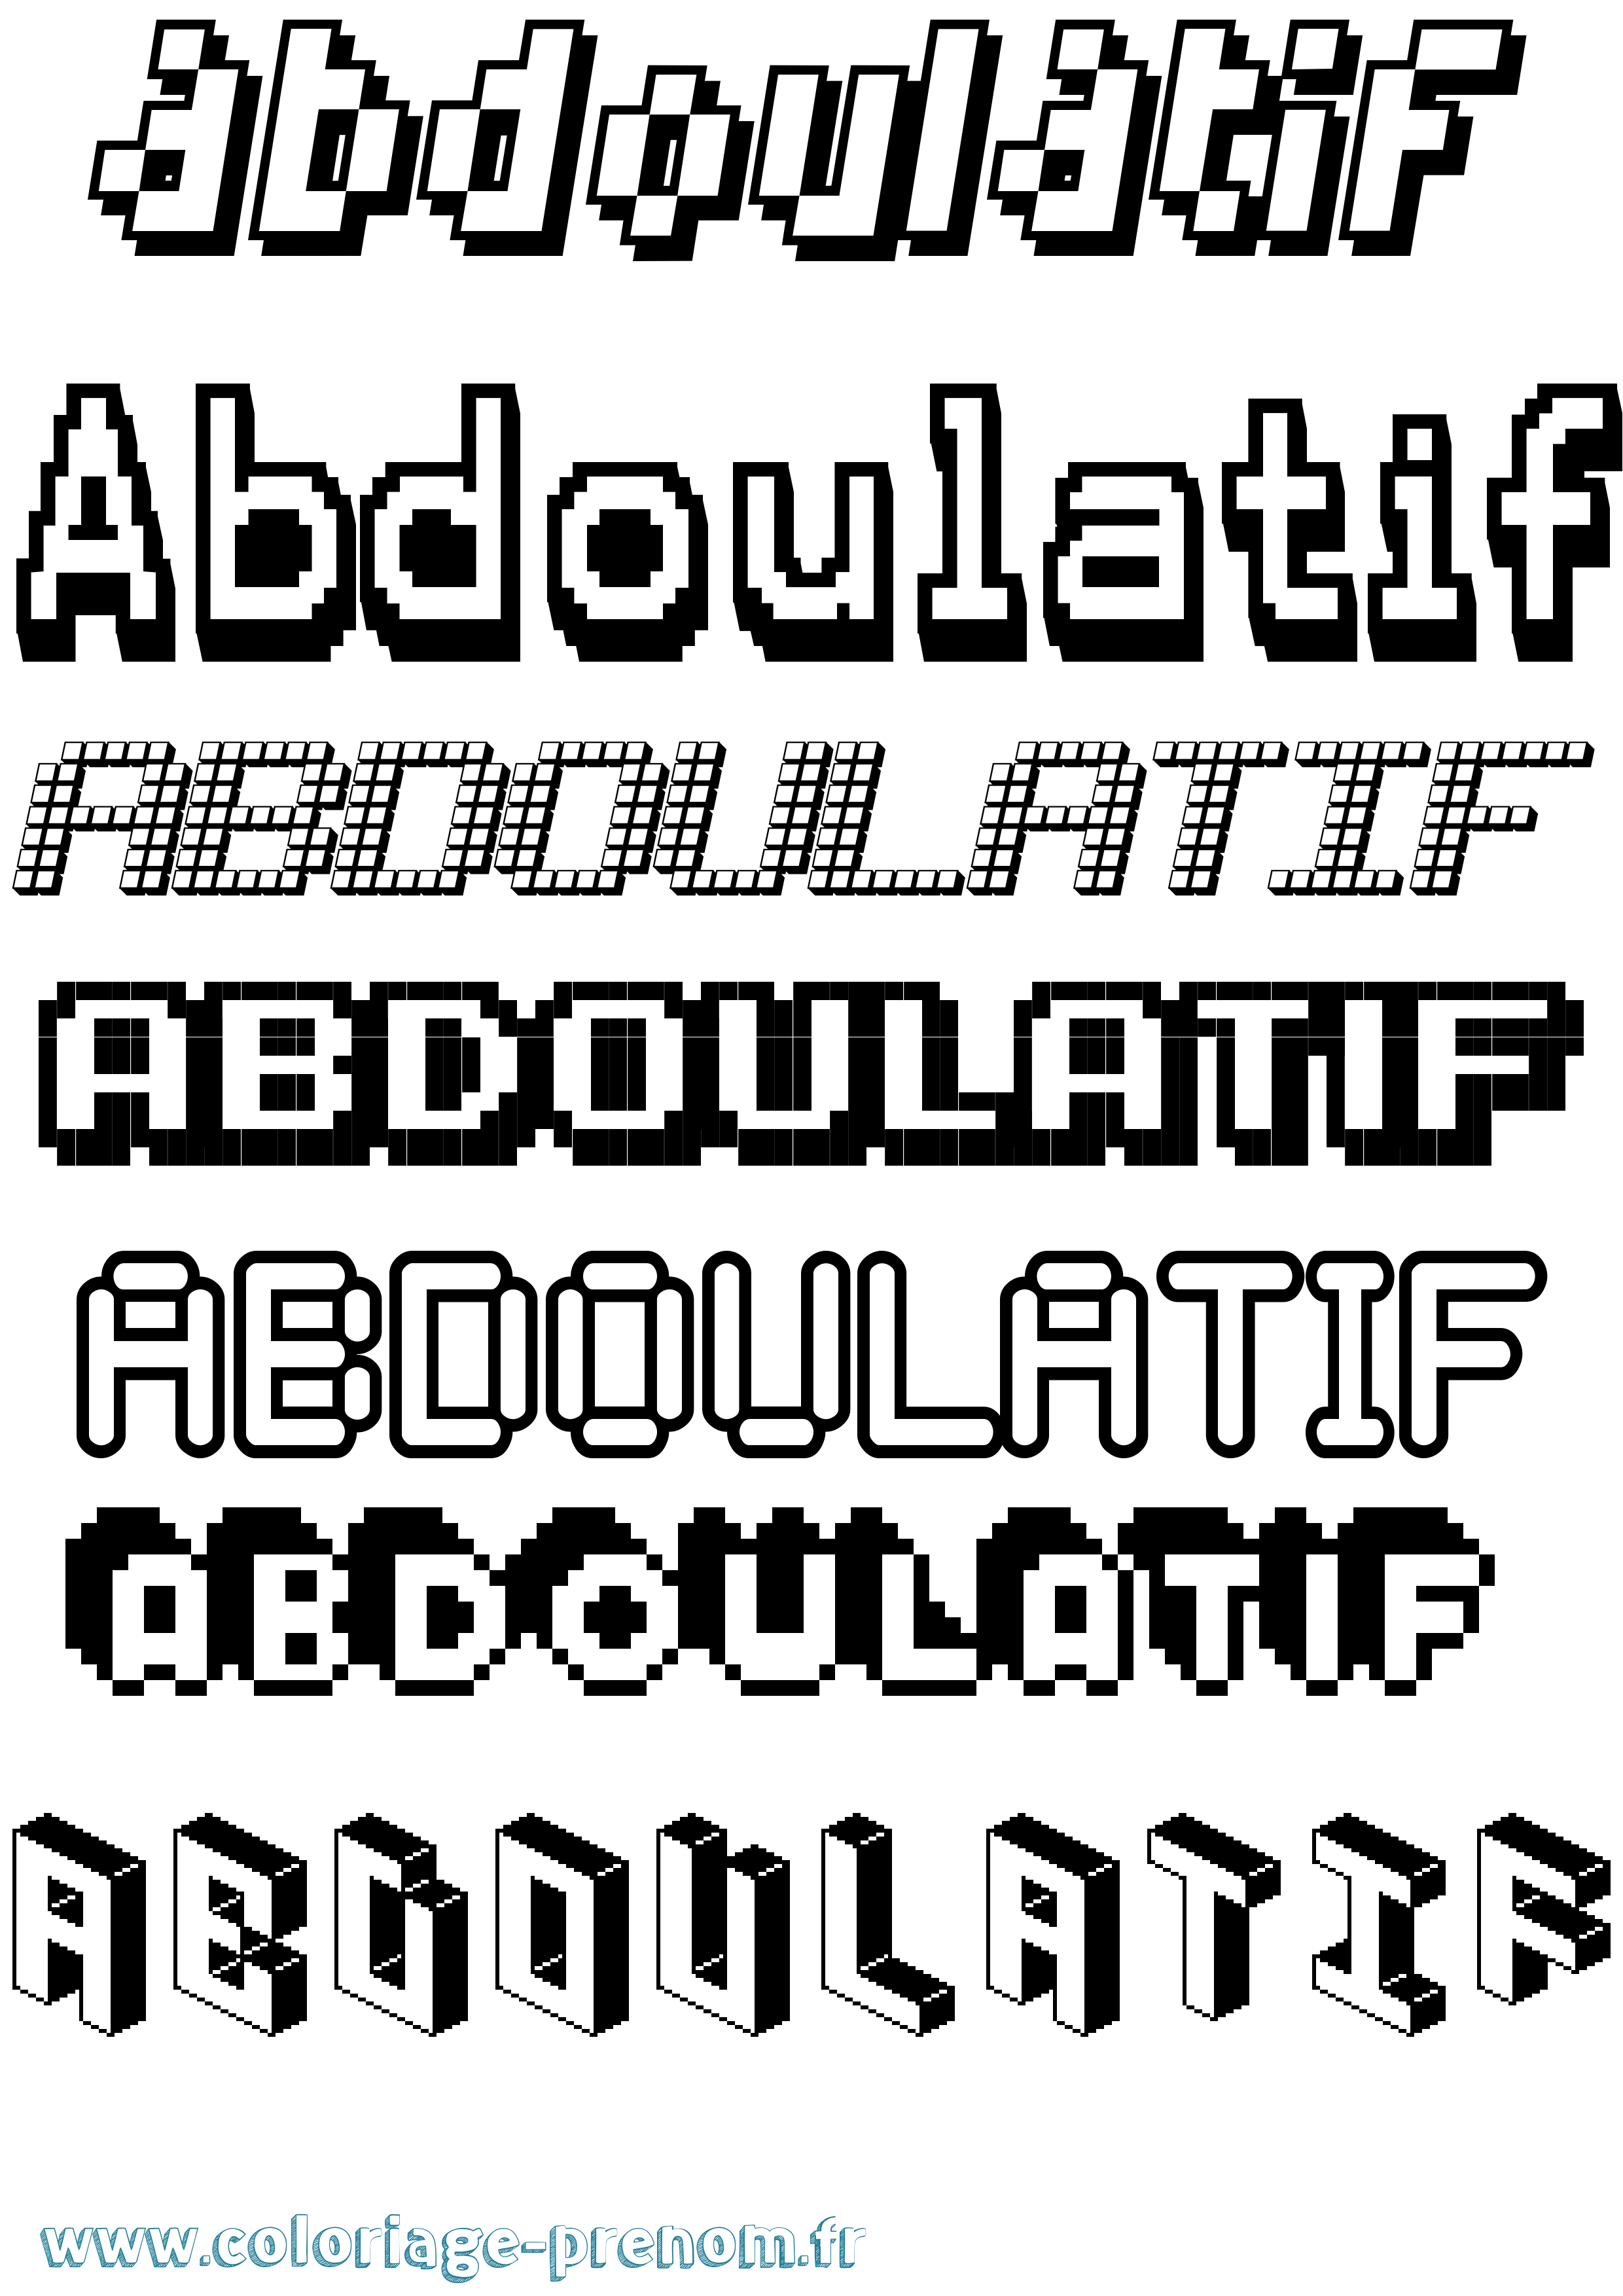 Coloriage prénom Abdoulatif Pixel